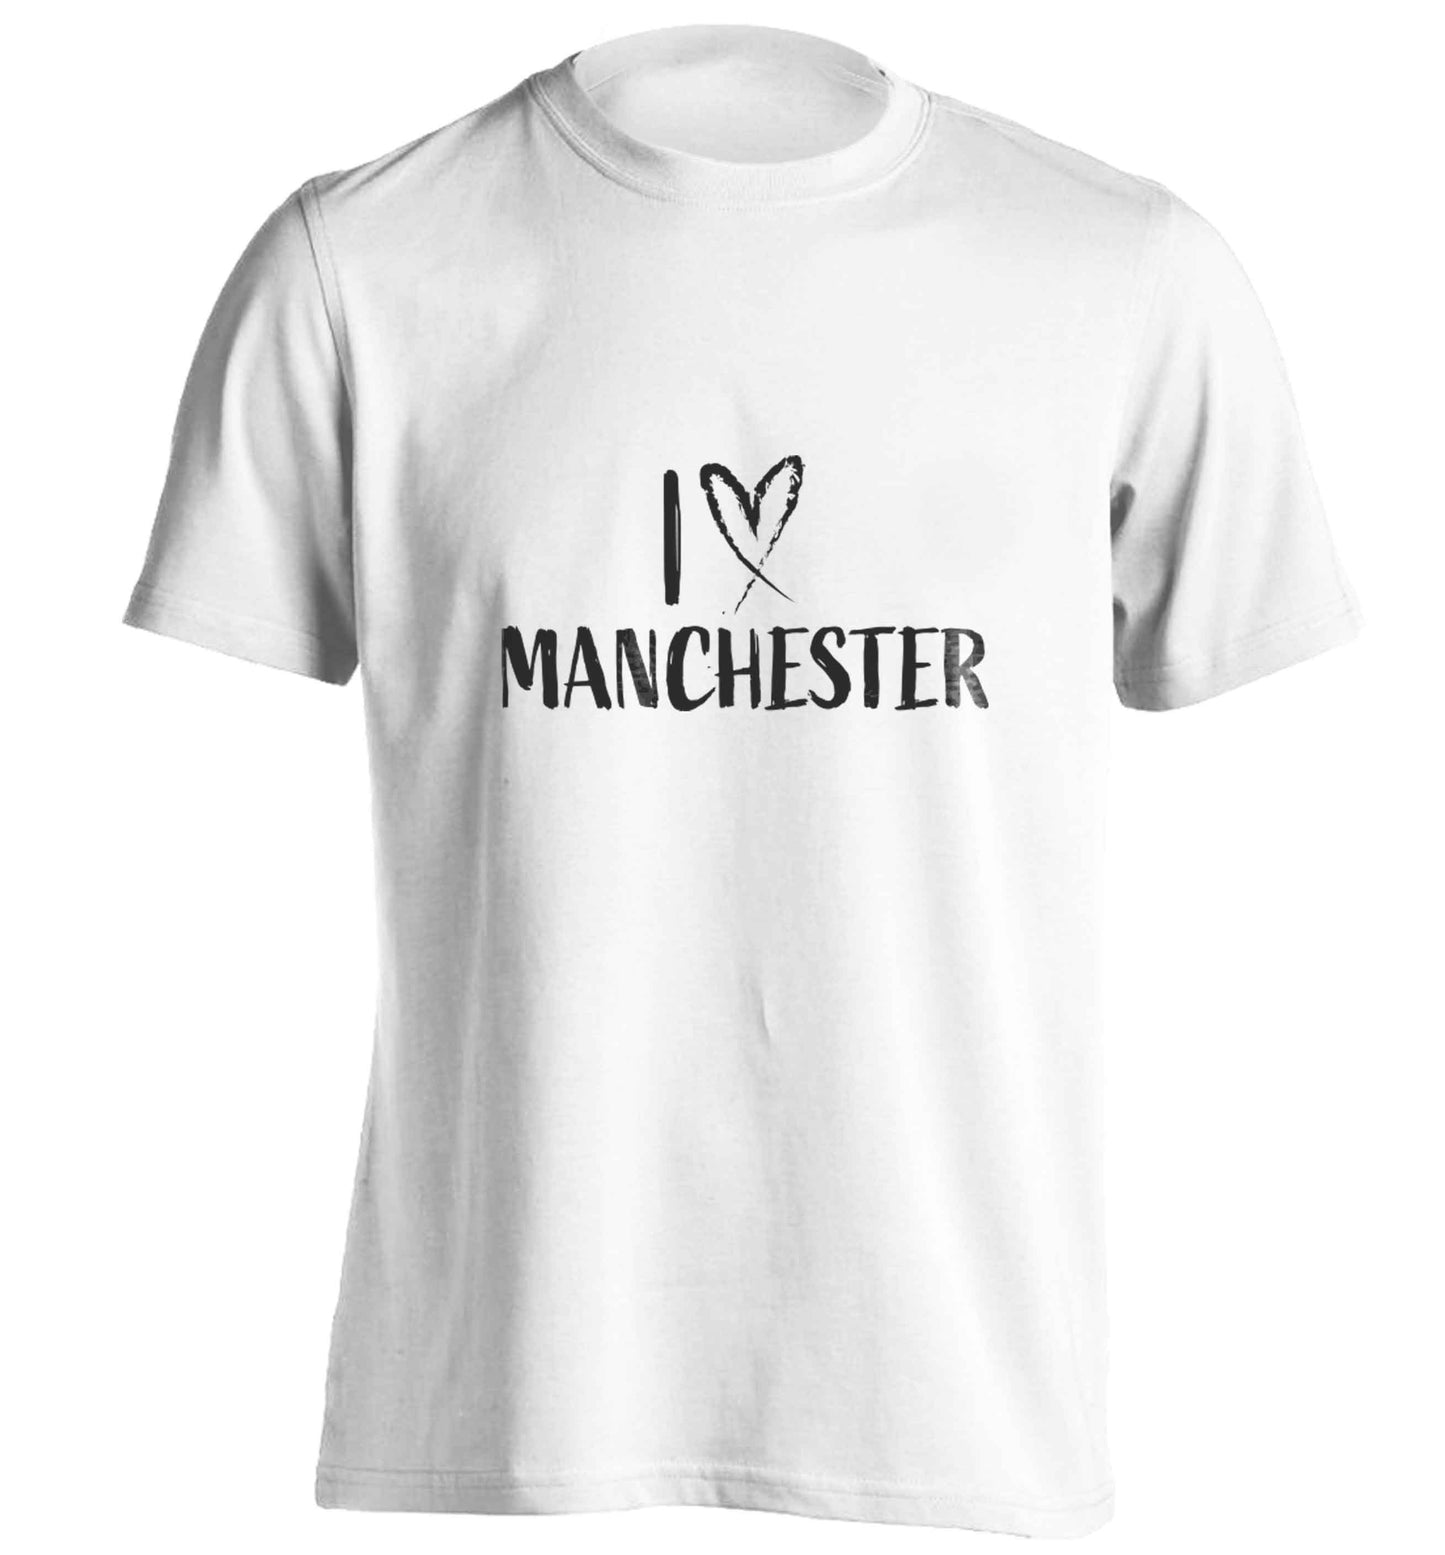 I love Manchester adults unisex white Tshirt 2XL